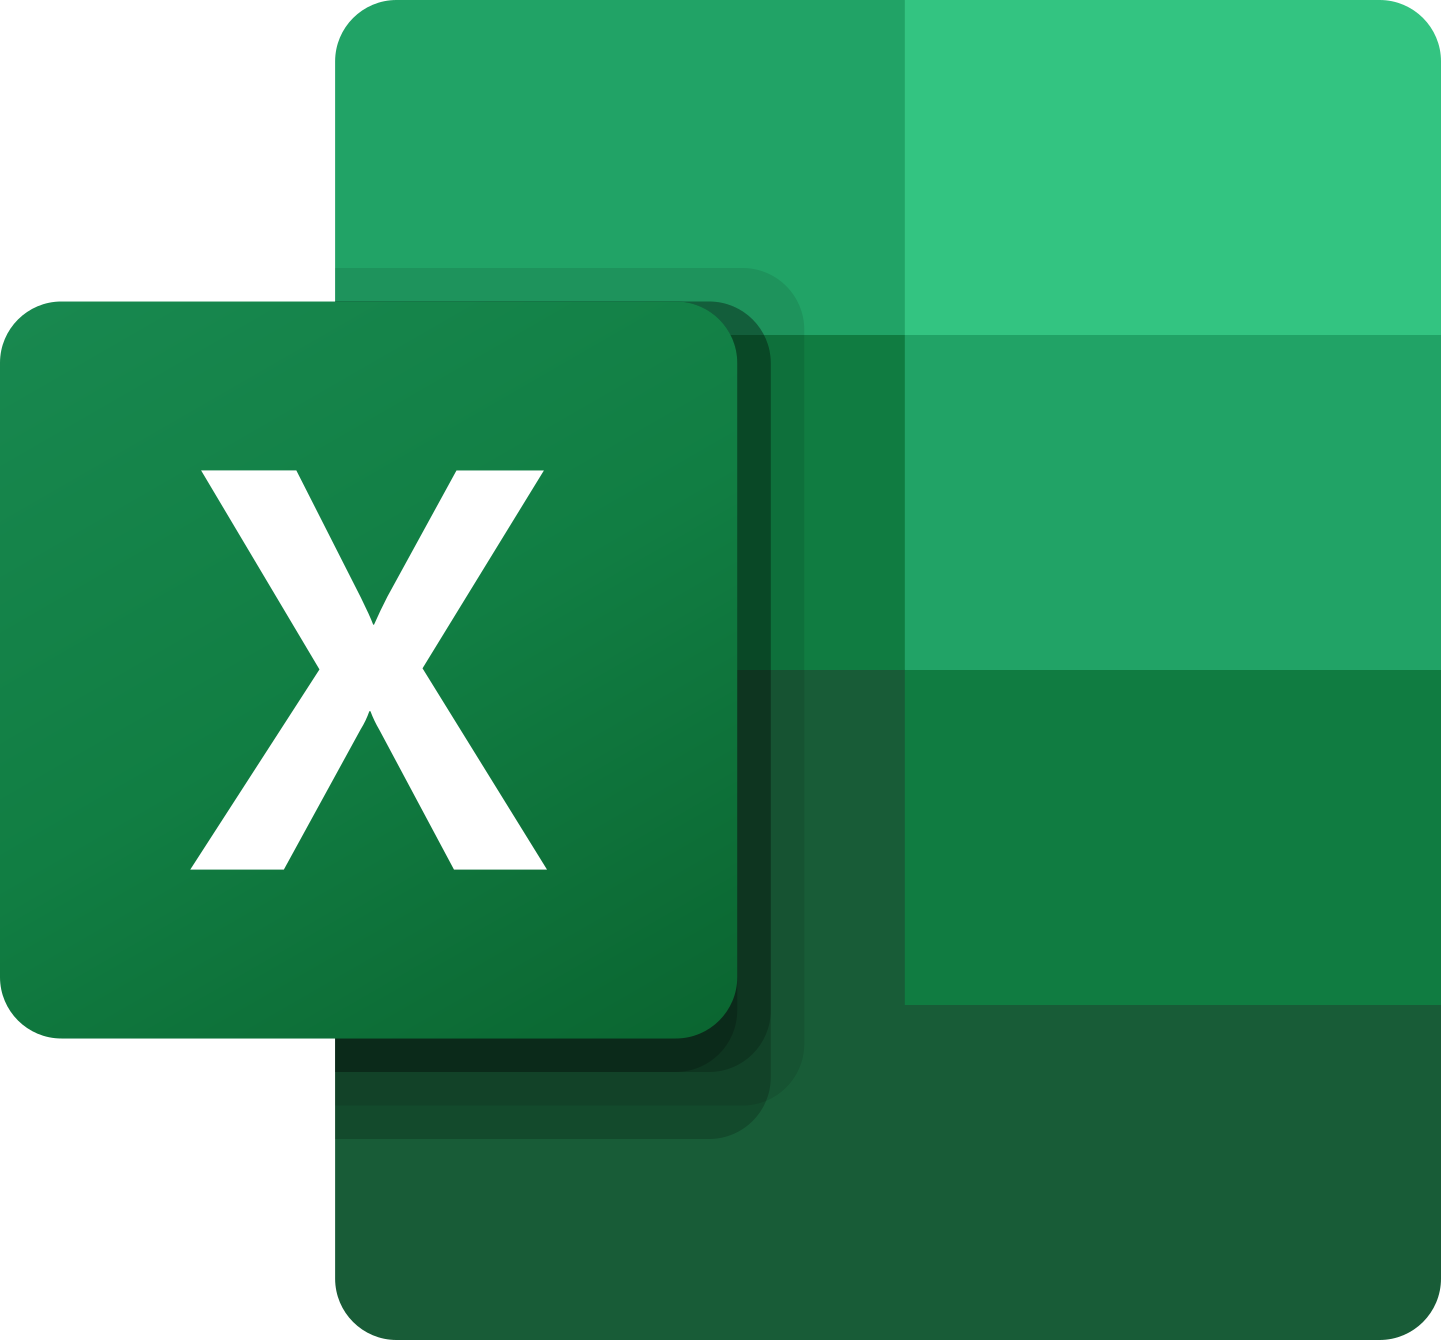 excel logo 2 - Microsoft Excel Logo